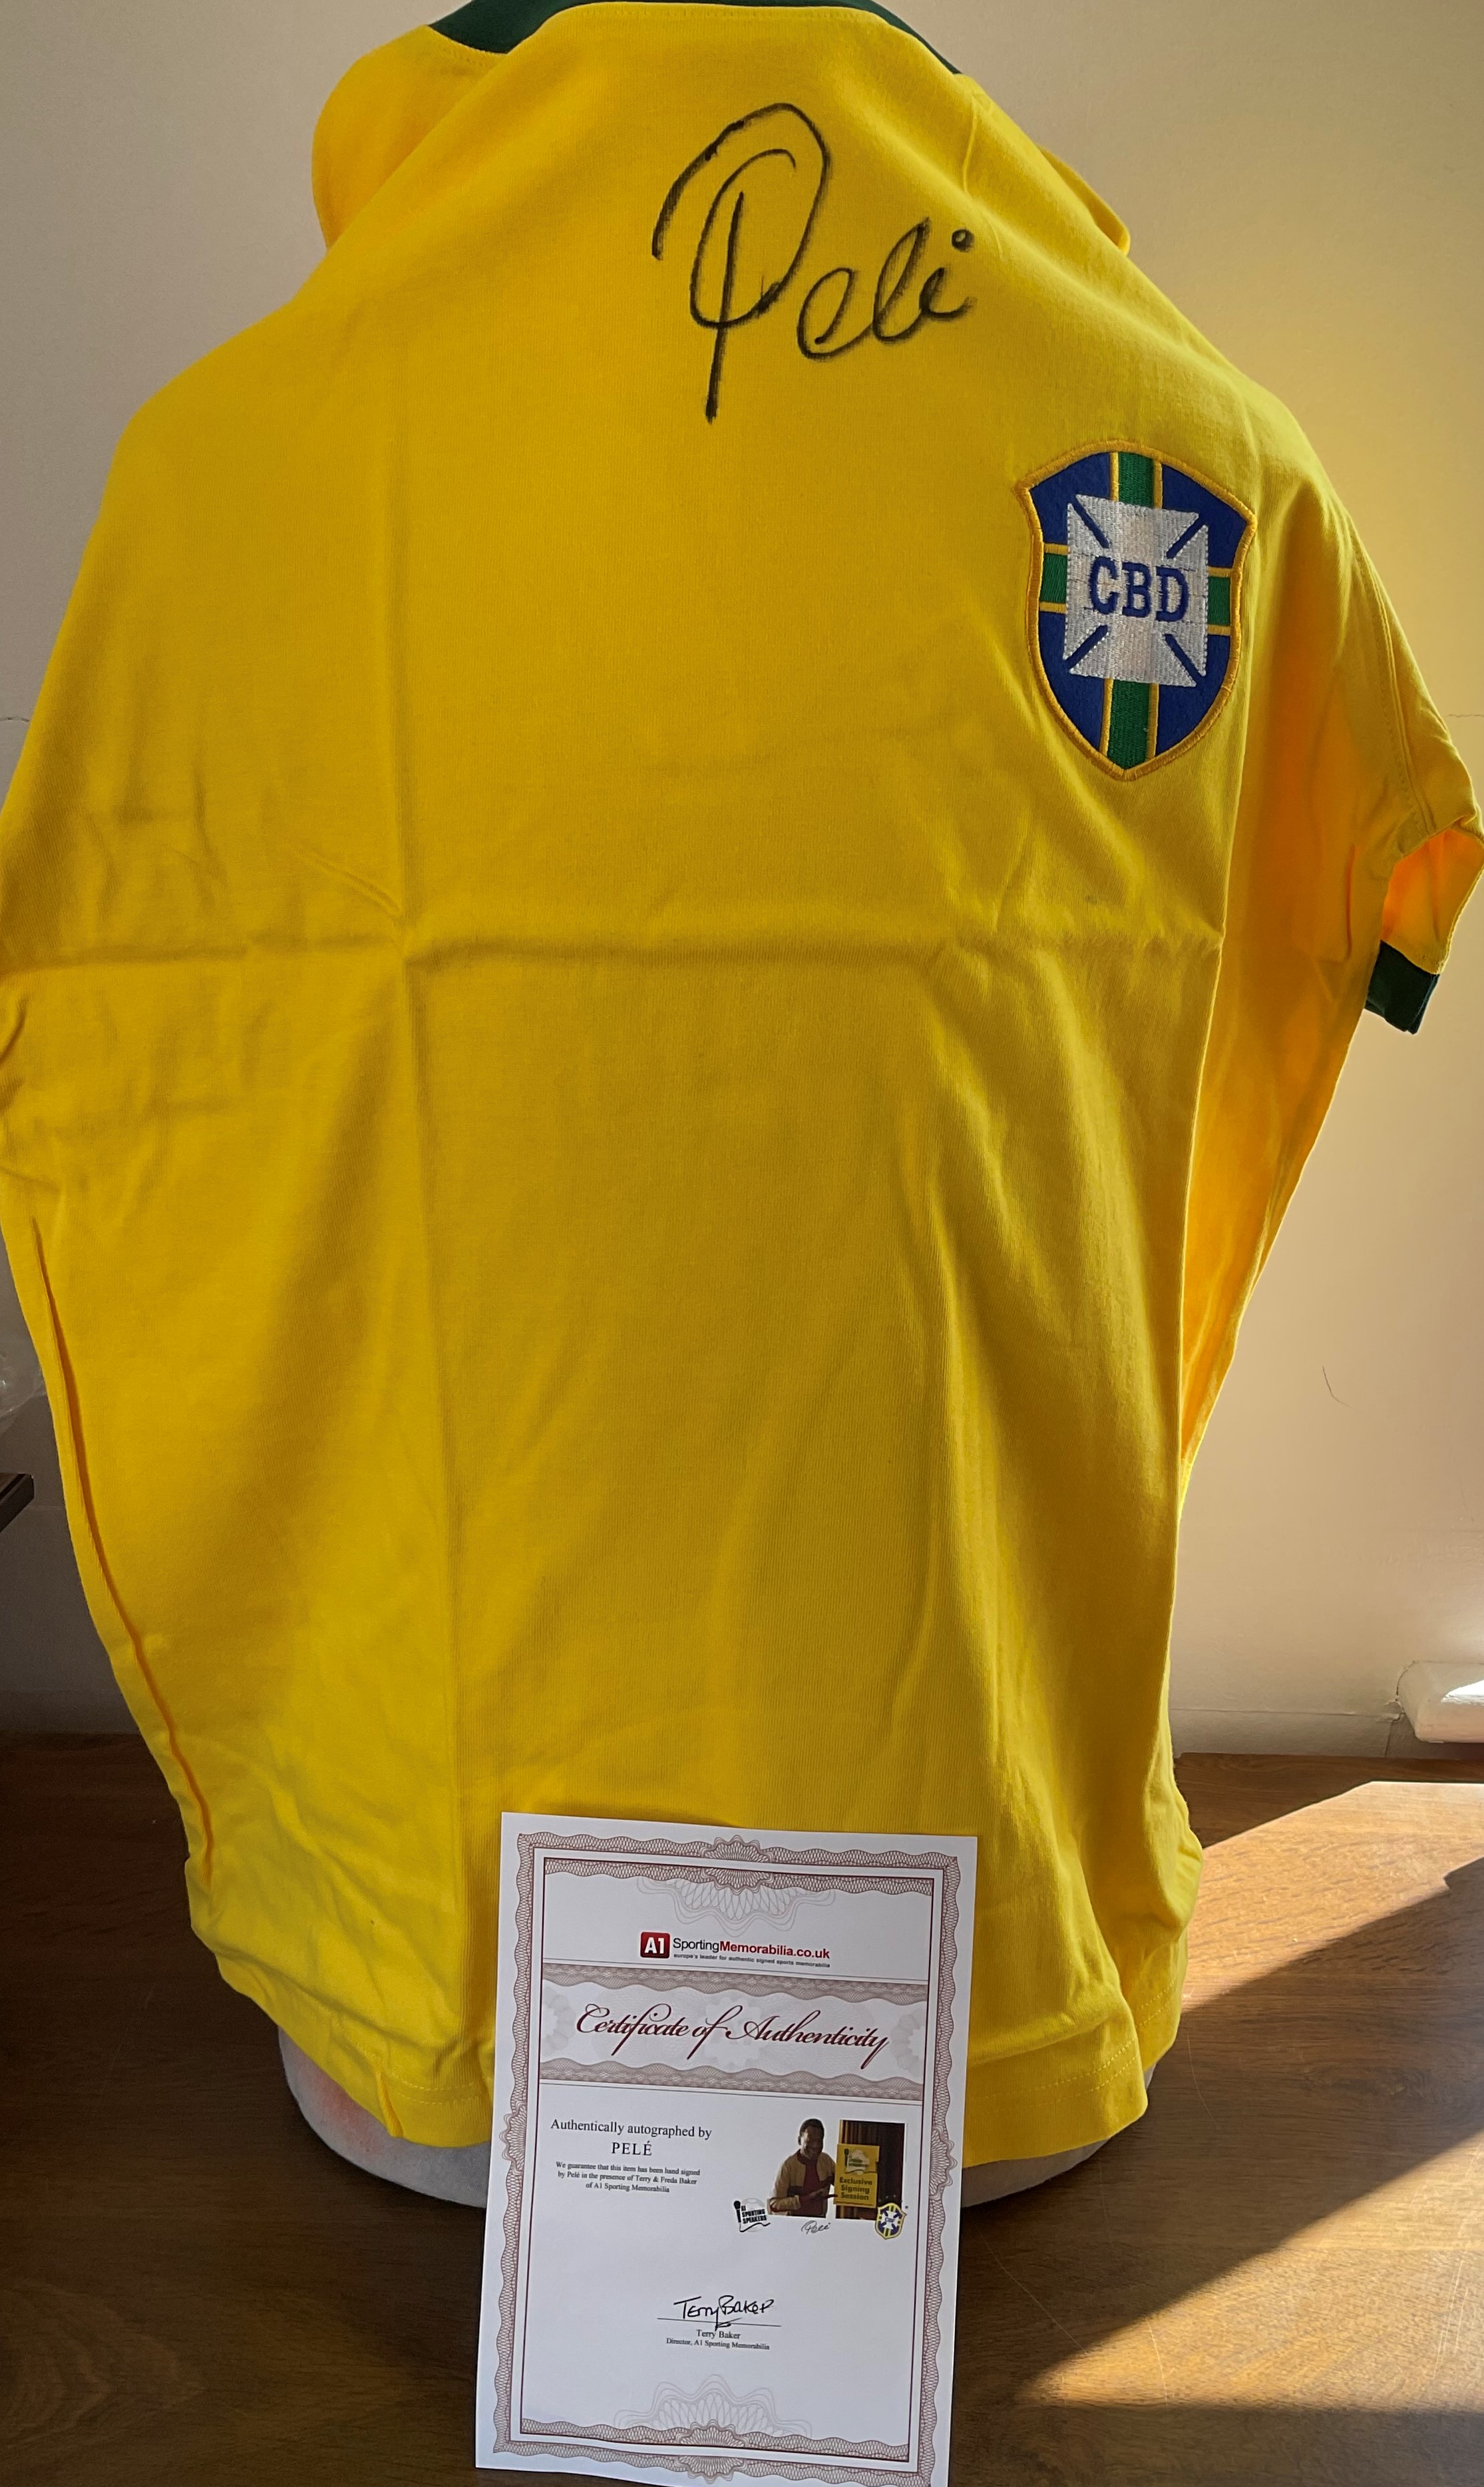 Football Brazil Edson Pele Signed Replica Brazil Football Shirt. Good condition. All autographs come